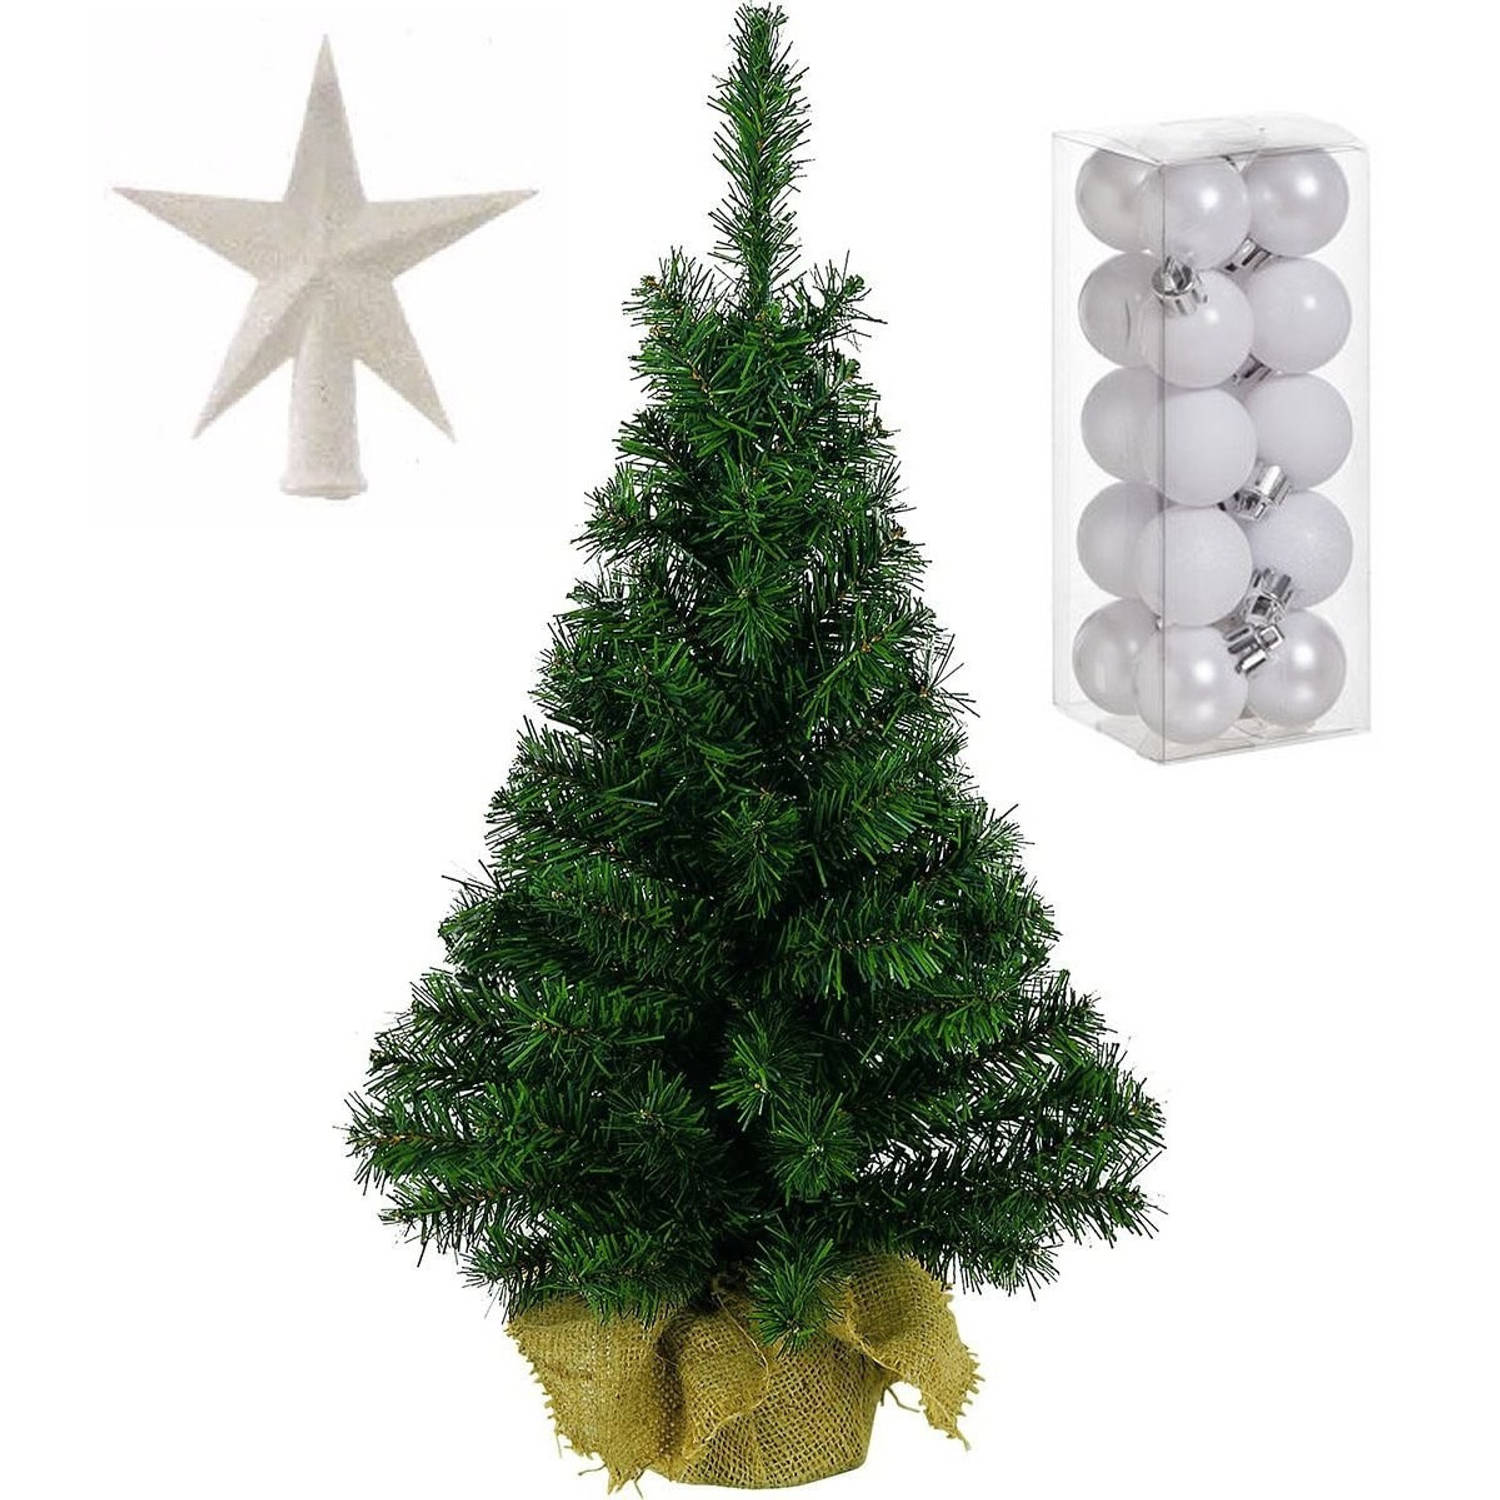 Volle kunst kerstboom 45 cm in jute zak inclusief witte versiering 21-delig Kunstkerstboom